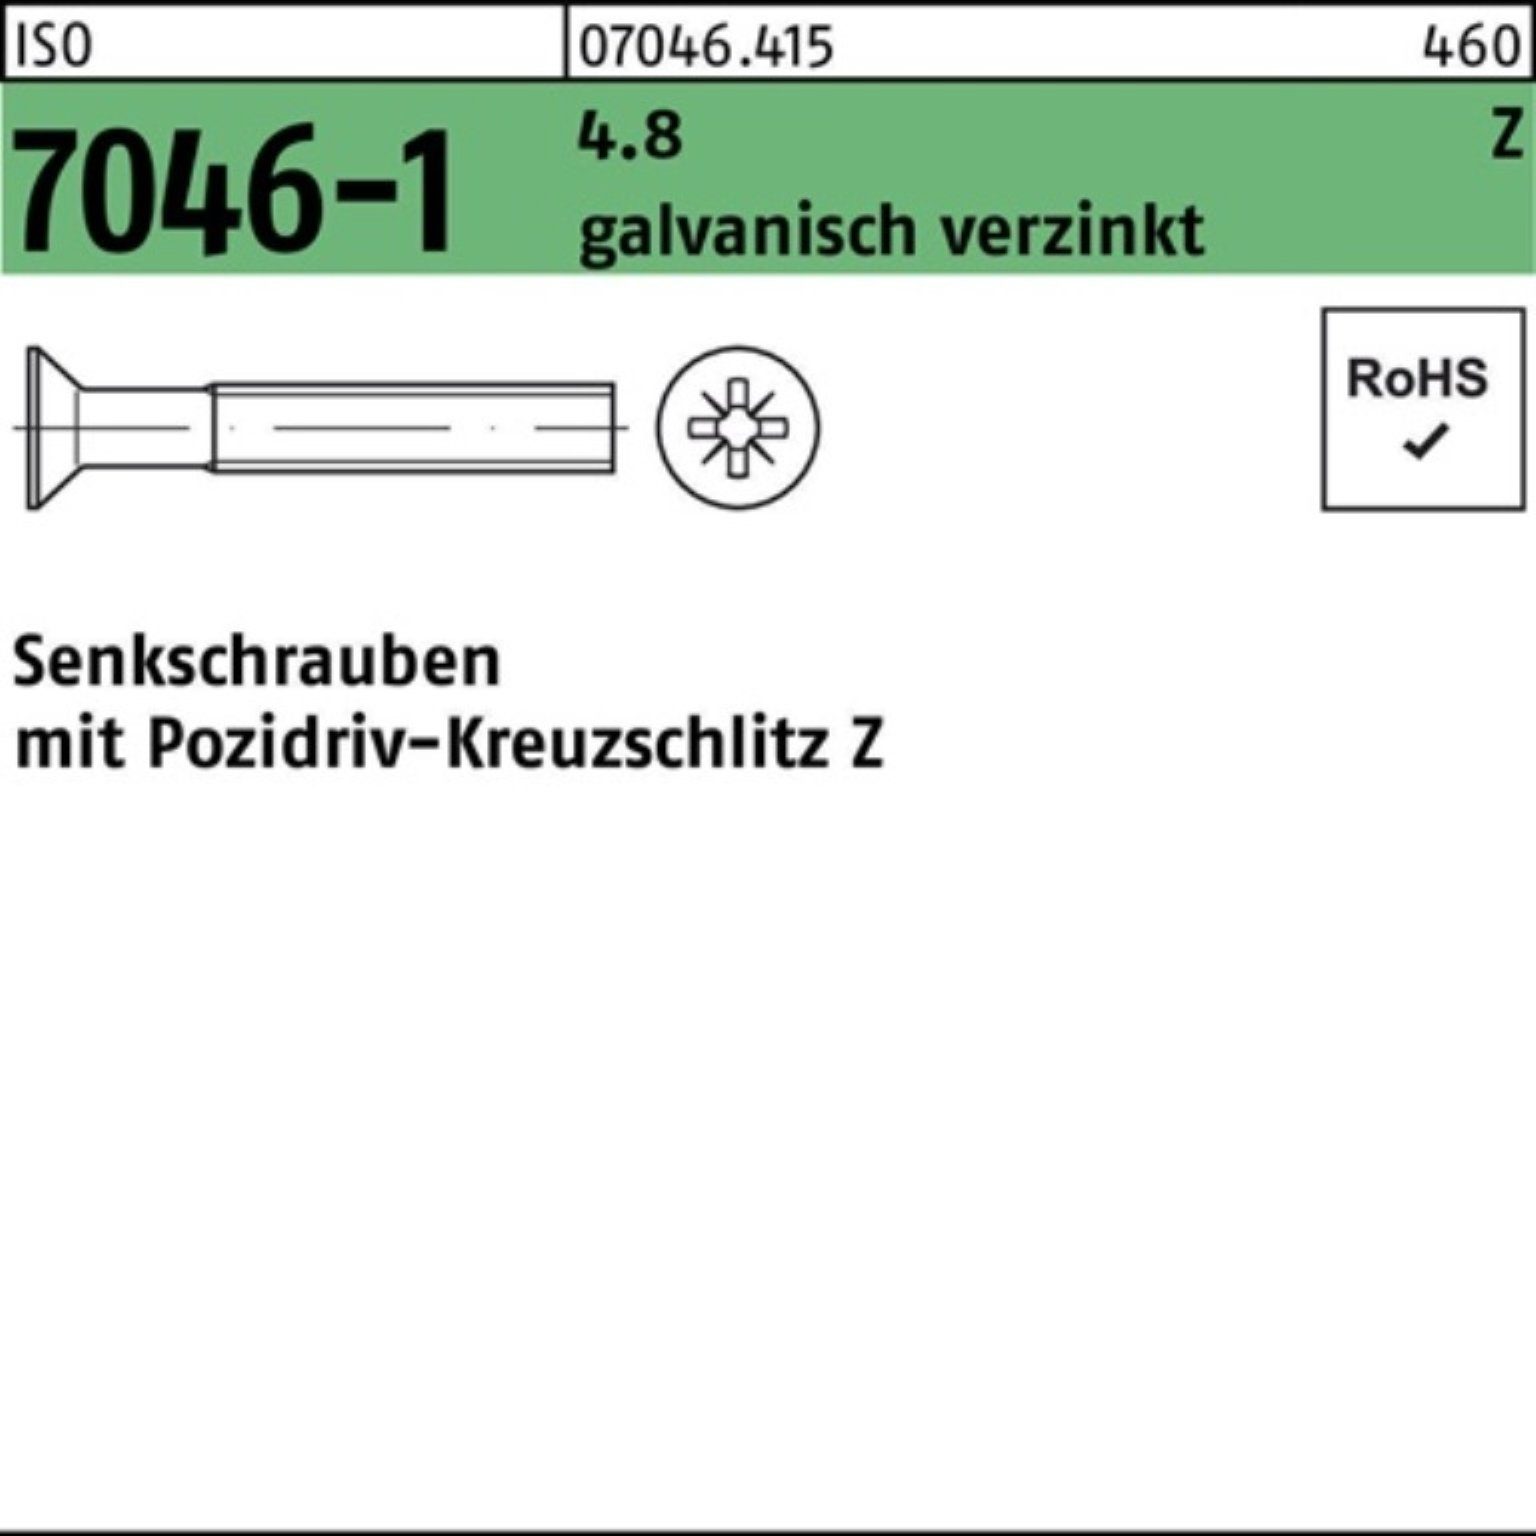 Reyher Senkschraube 500er 4.8 M5x40-Z 7046-1 galv.verz. 500St. PZ Senkschraube ISO Pack IS